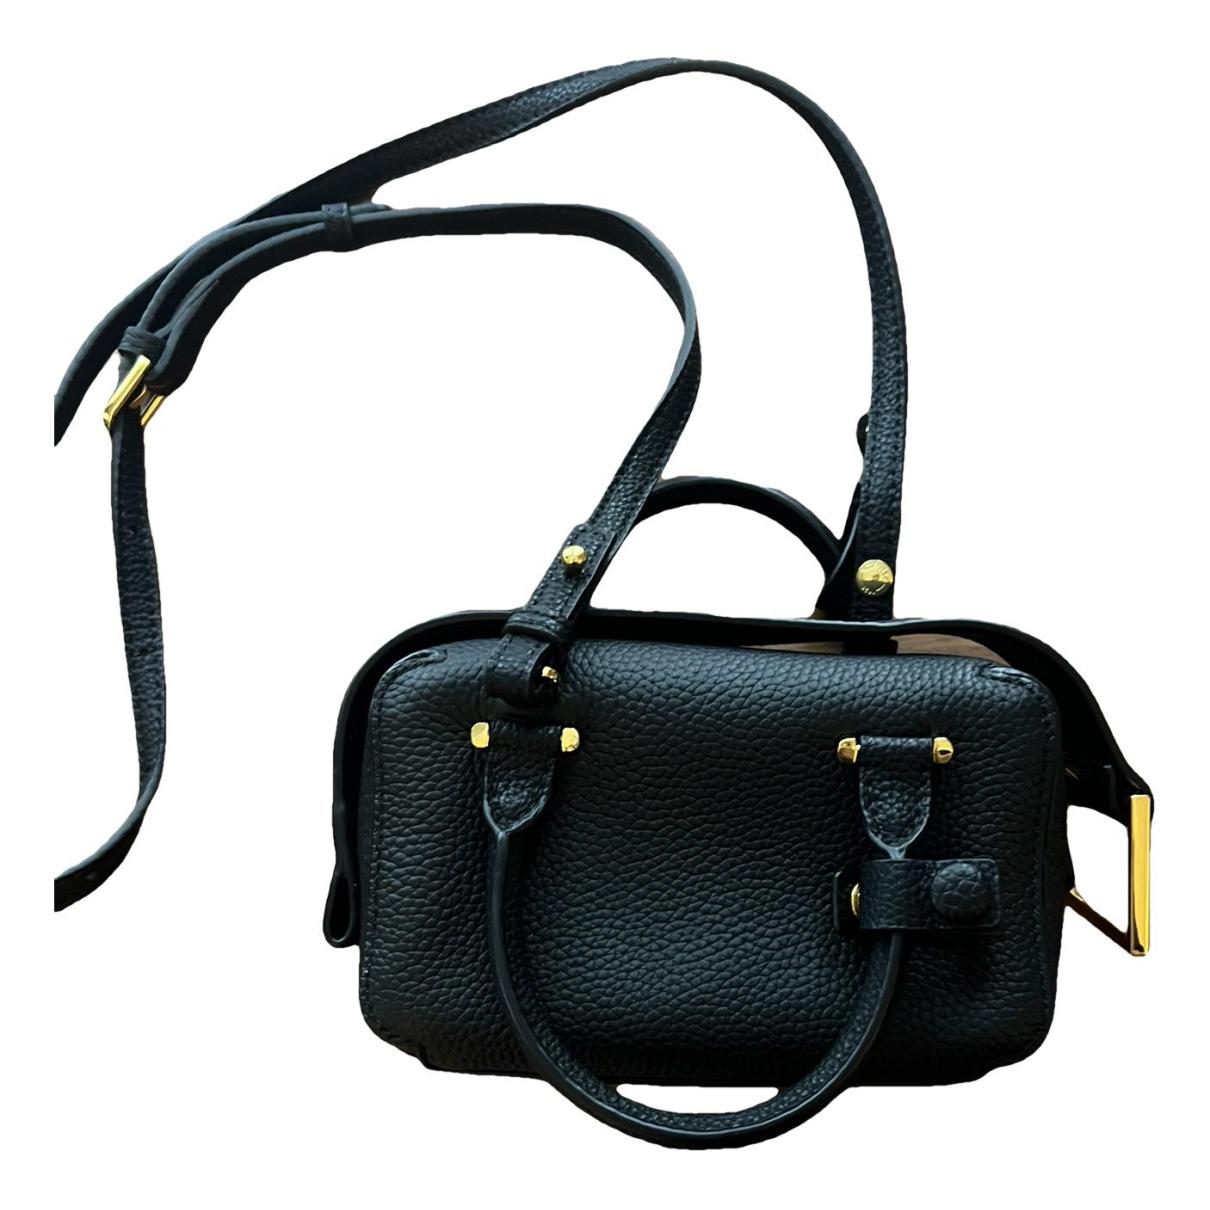 Louis Vuitton - Authenticated Sofia Coppola Handbag - Leather Burgundy Plain for Women, Very Good Condition